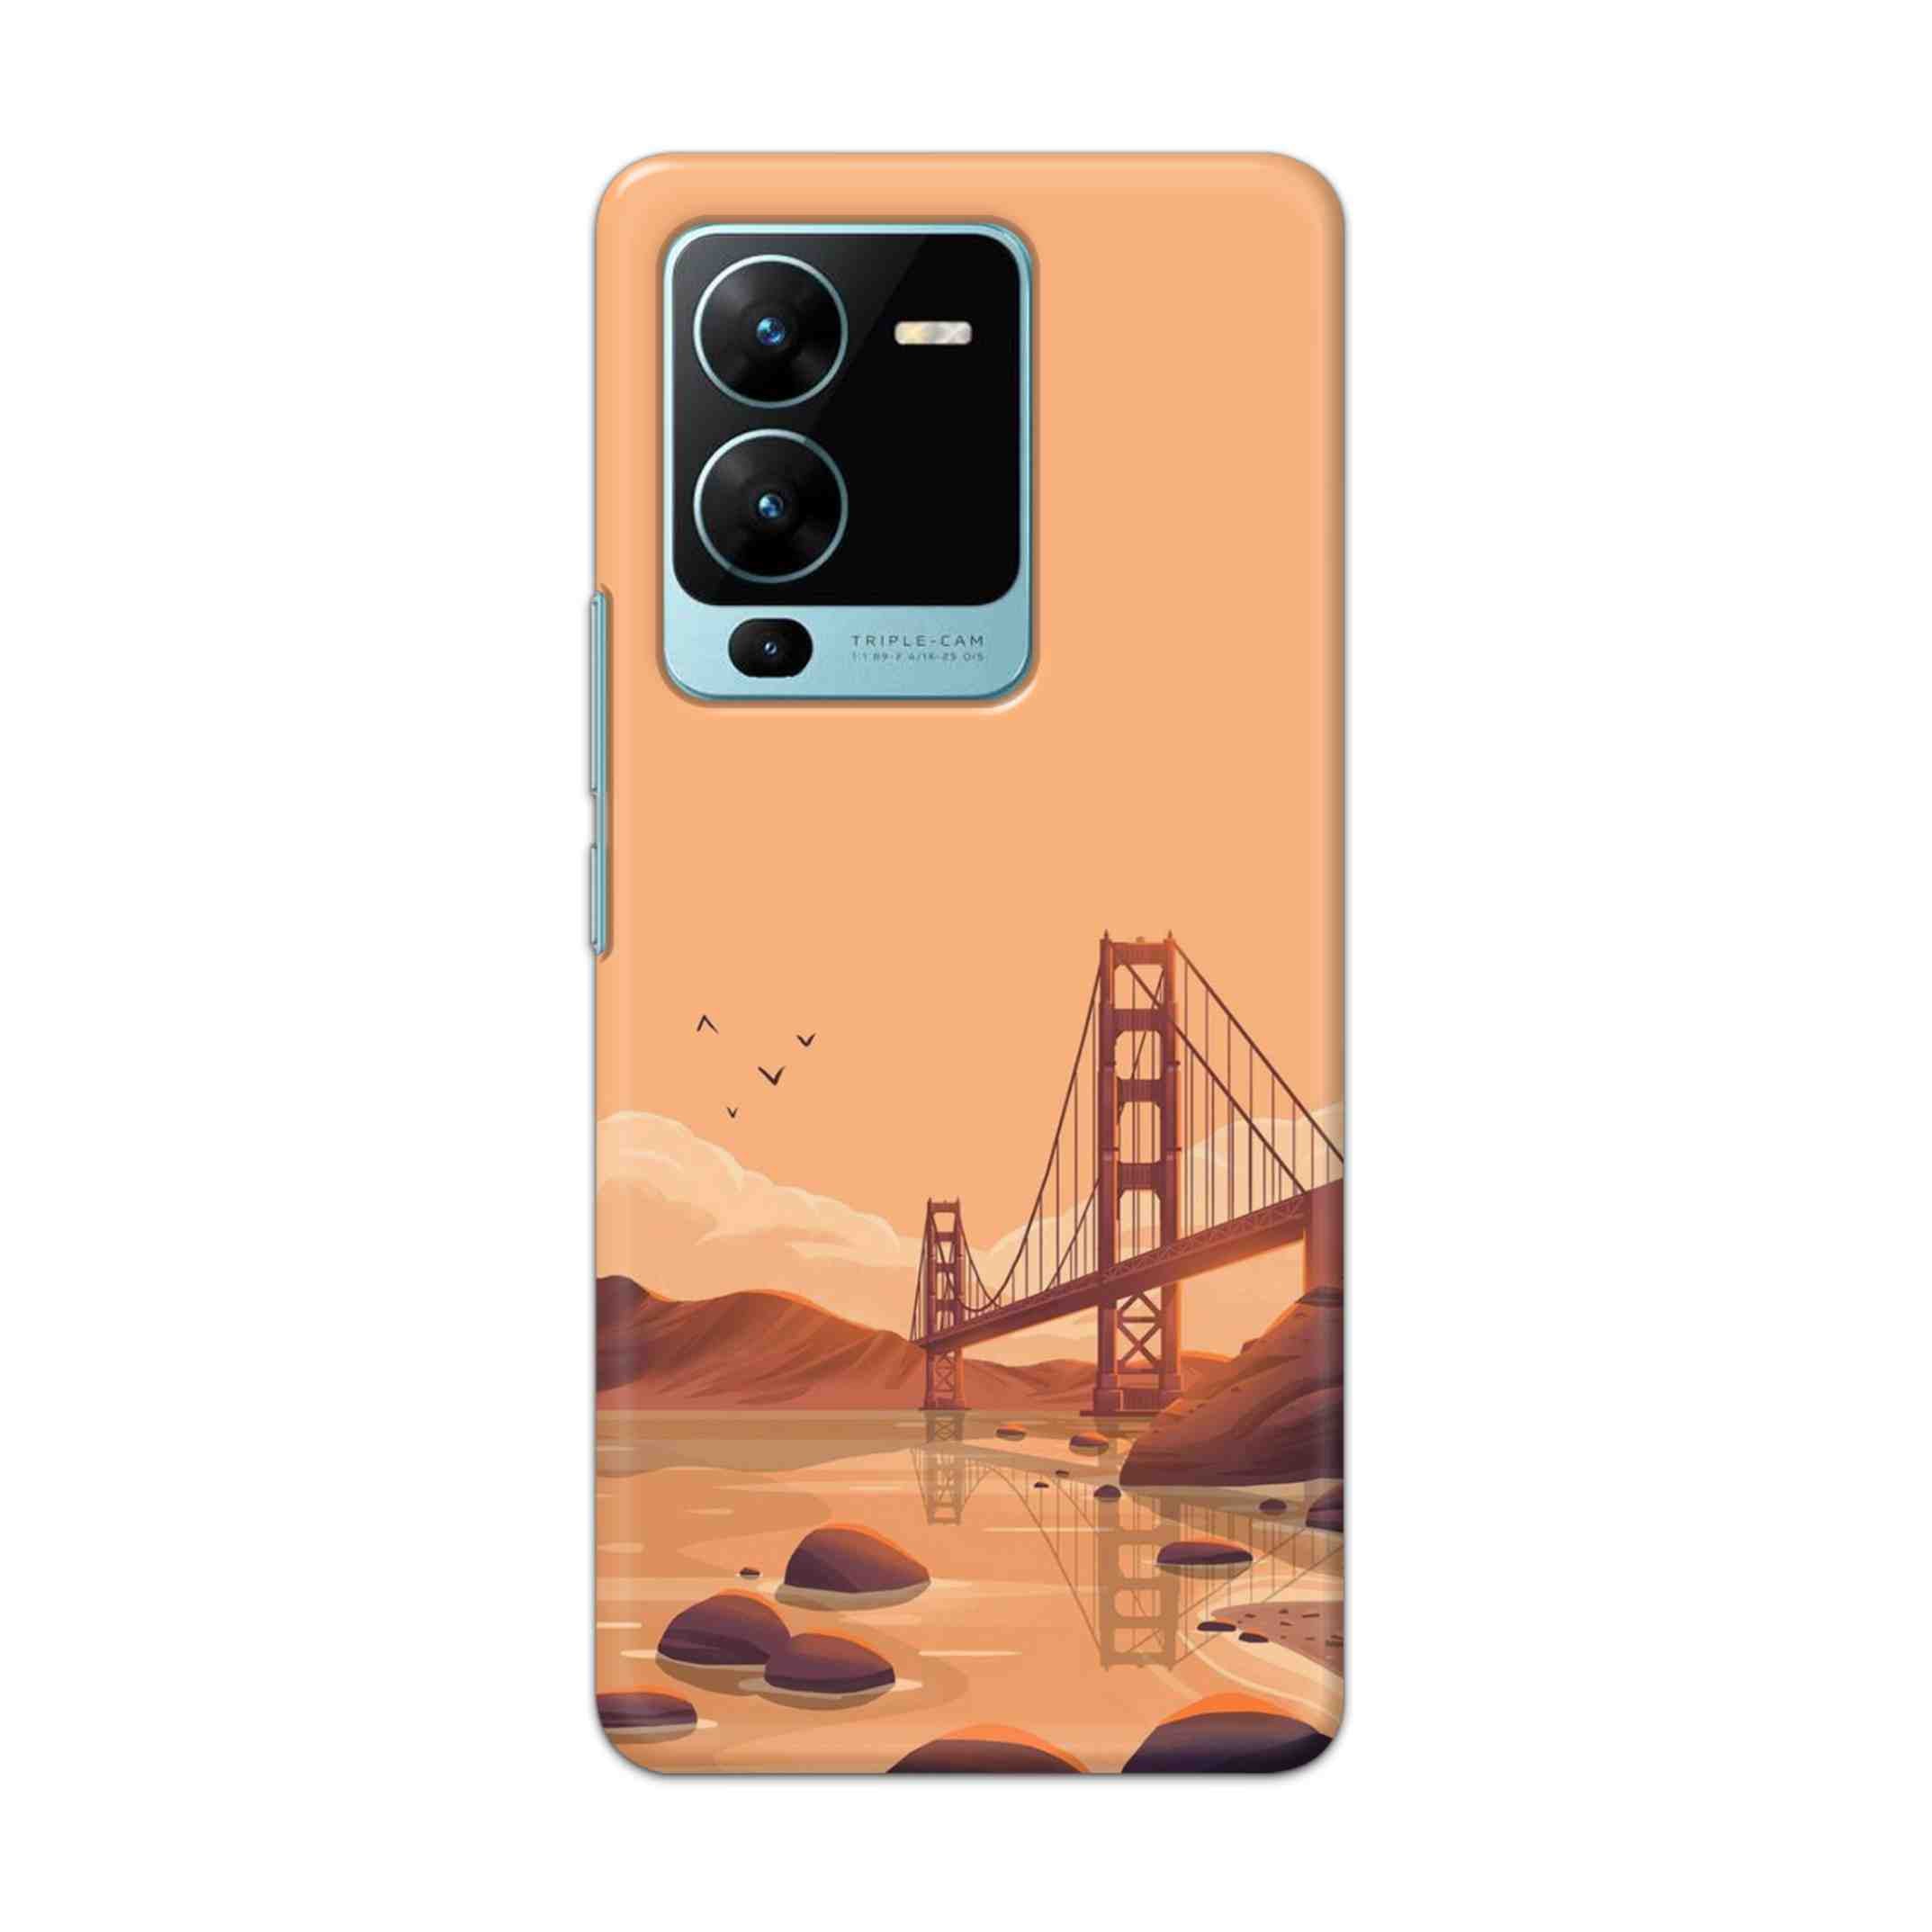 Buy San Francisco Hard Back Mobile Phone Case Cover For Vivo V25 Pro Online